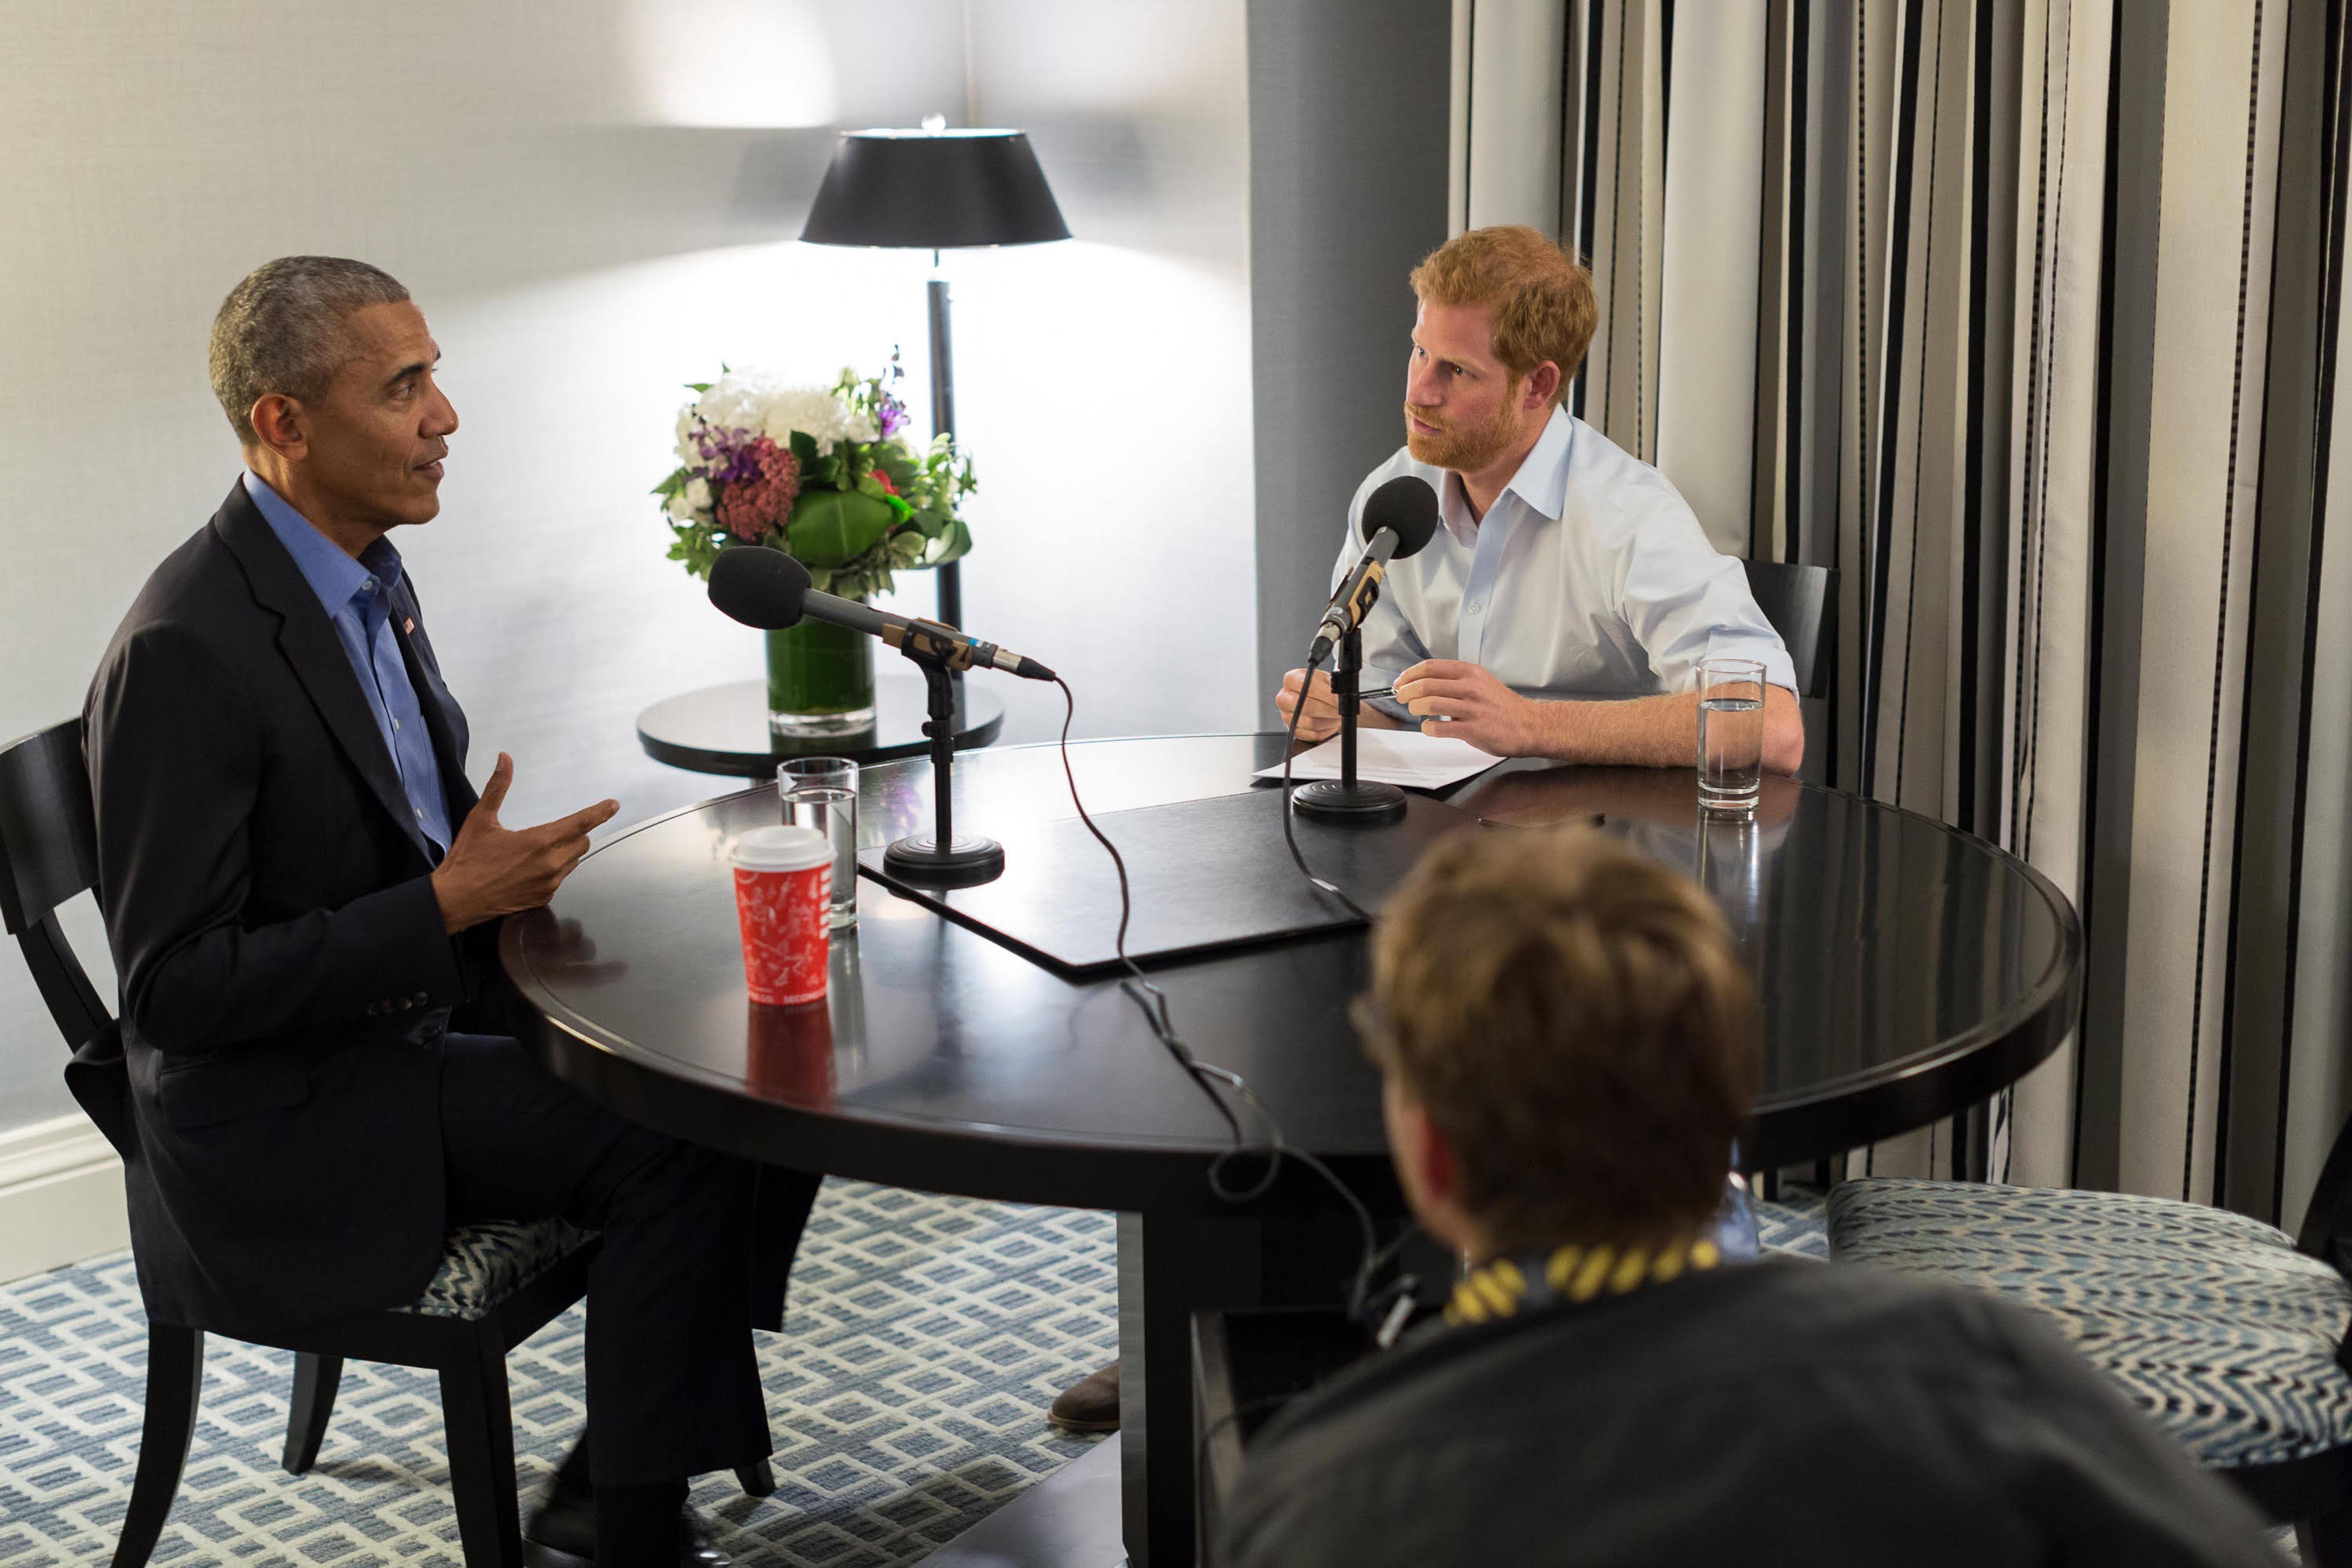 Prince Harry interviews former US President Barack Obama as